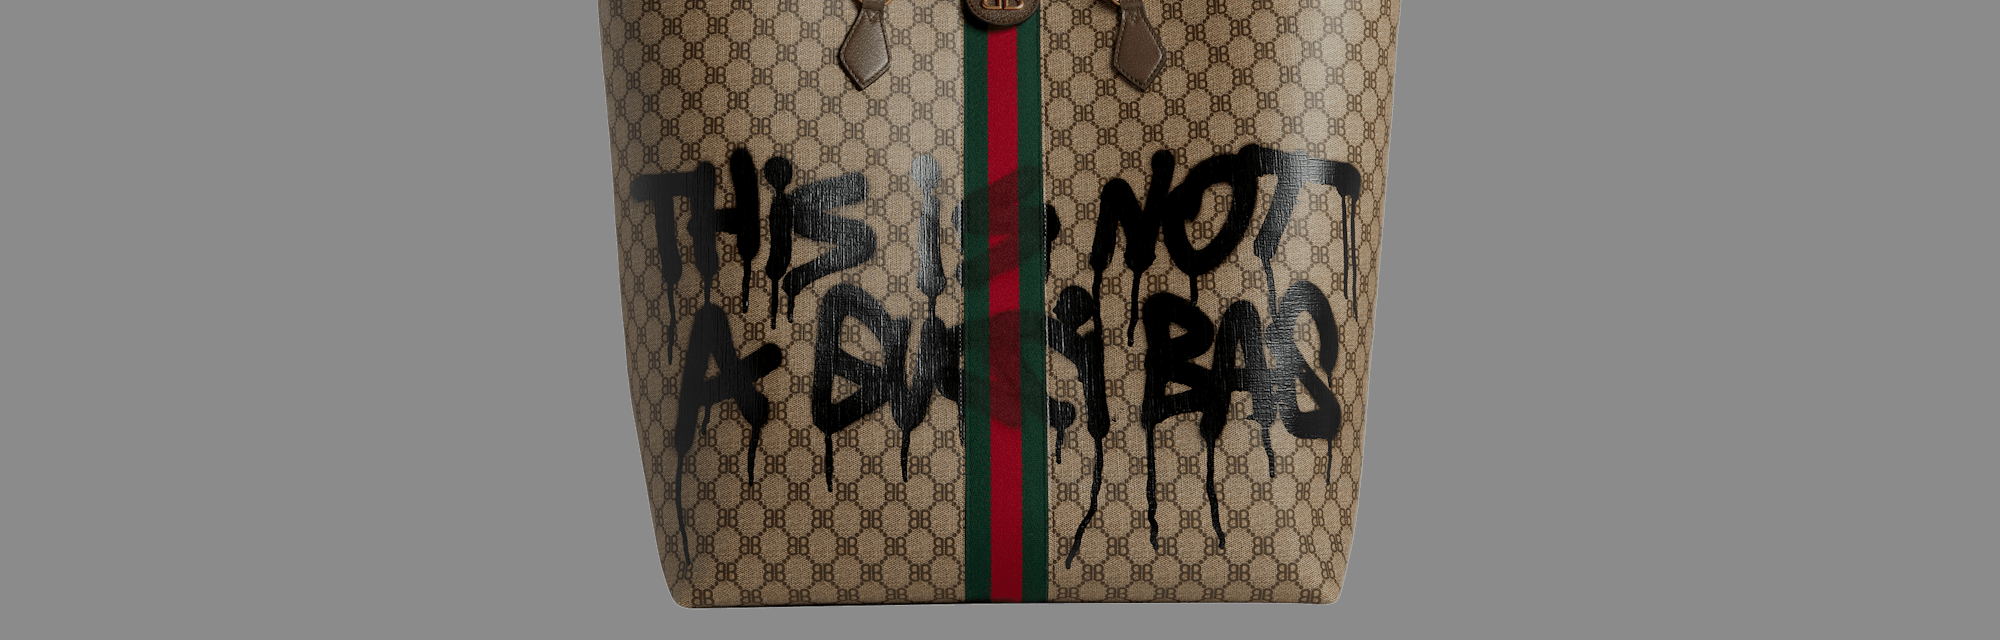 Balenciaga 'hacks' Gucci's classic bags to make them more street